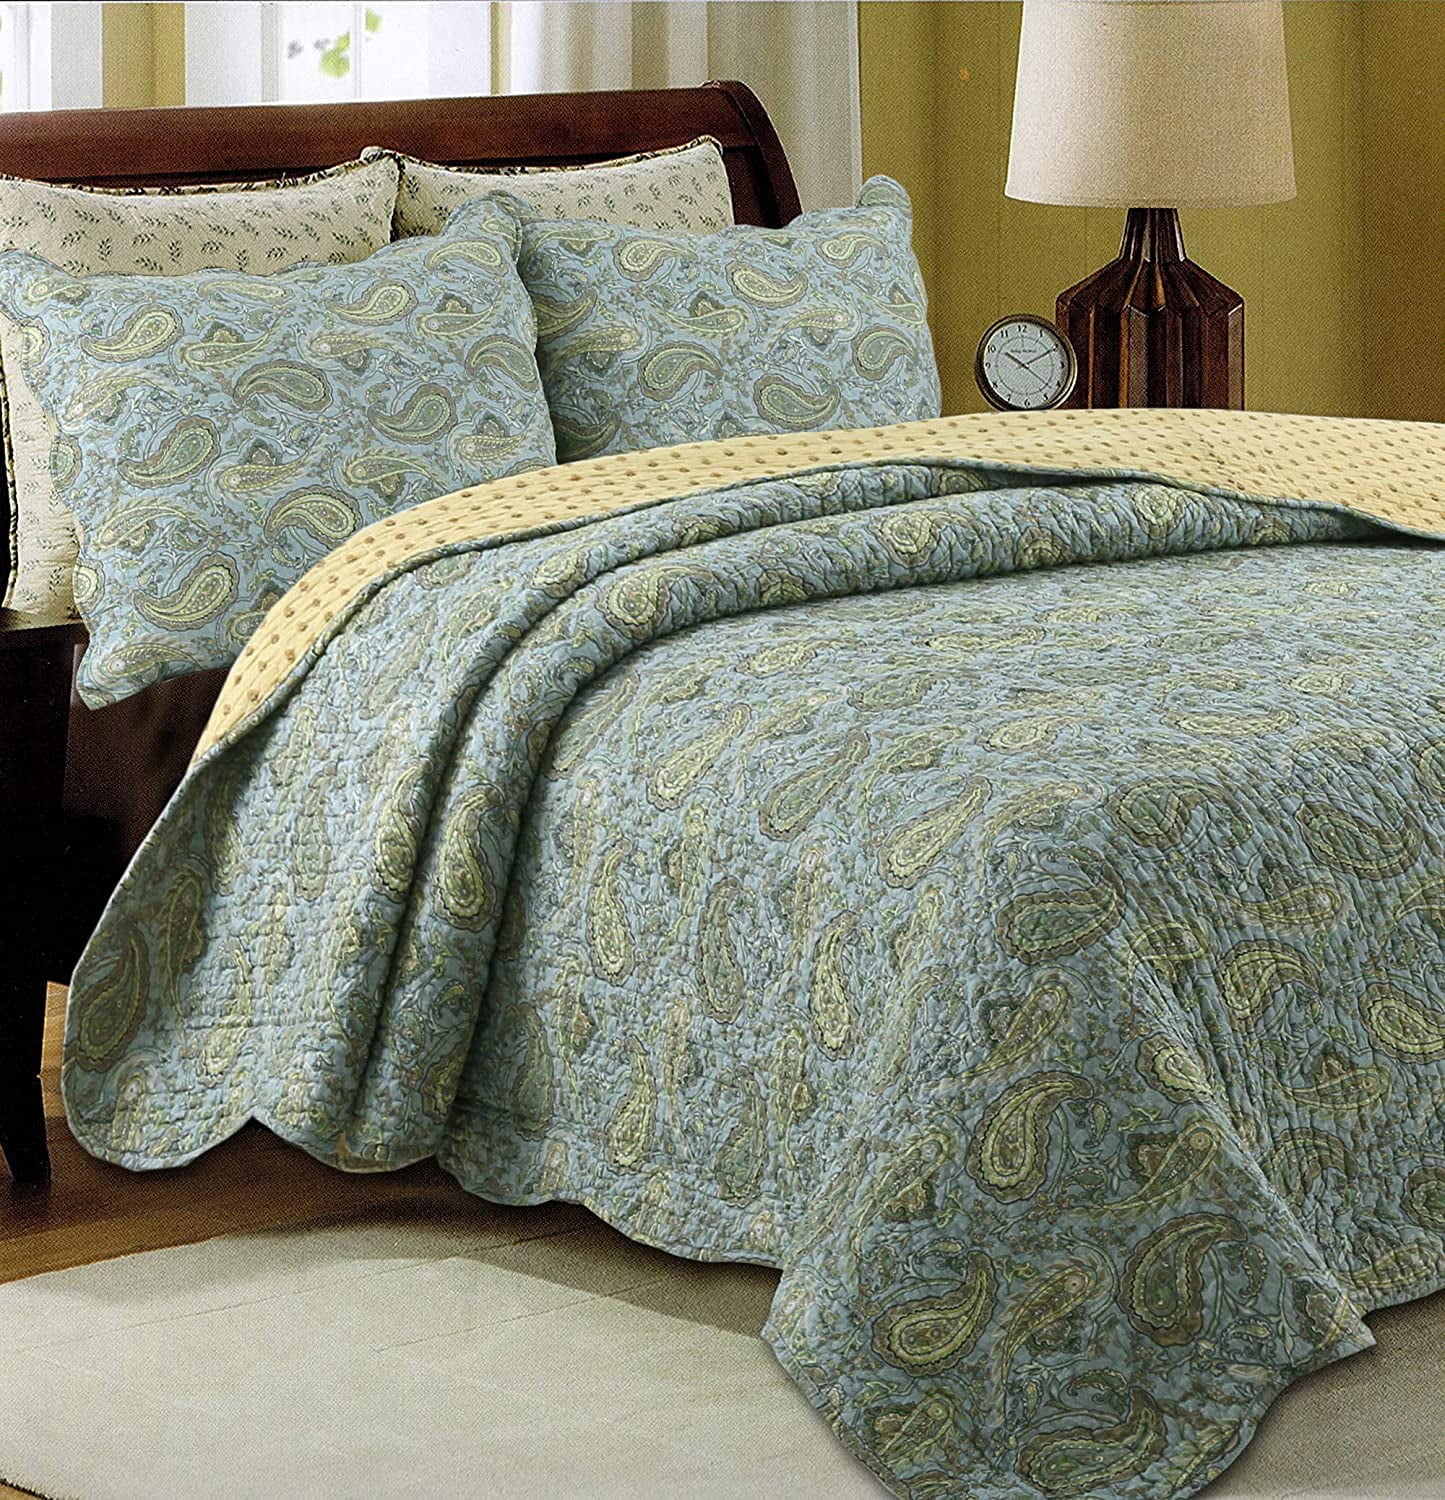 Brandream Green Paisley Quilt Bedding Set Luxury Oversized Queen Quilt Set Soft Cotton Romantic Bedspreads Queen Size 3-Piece 